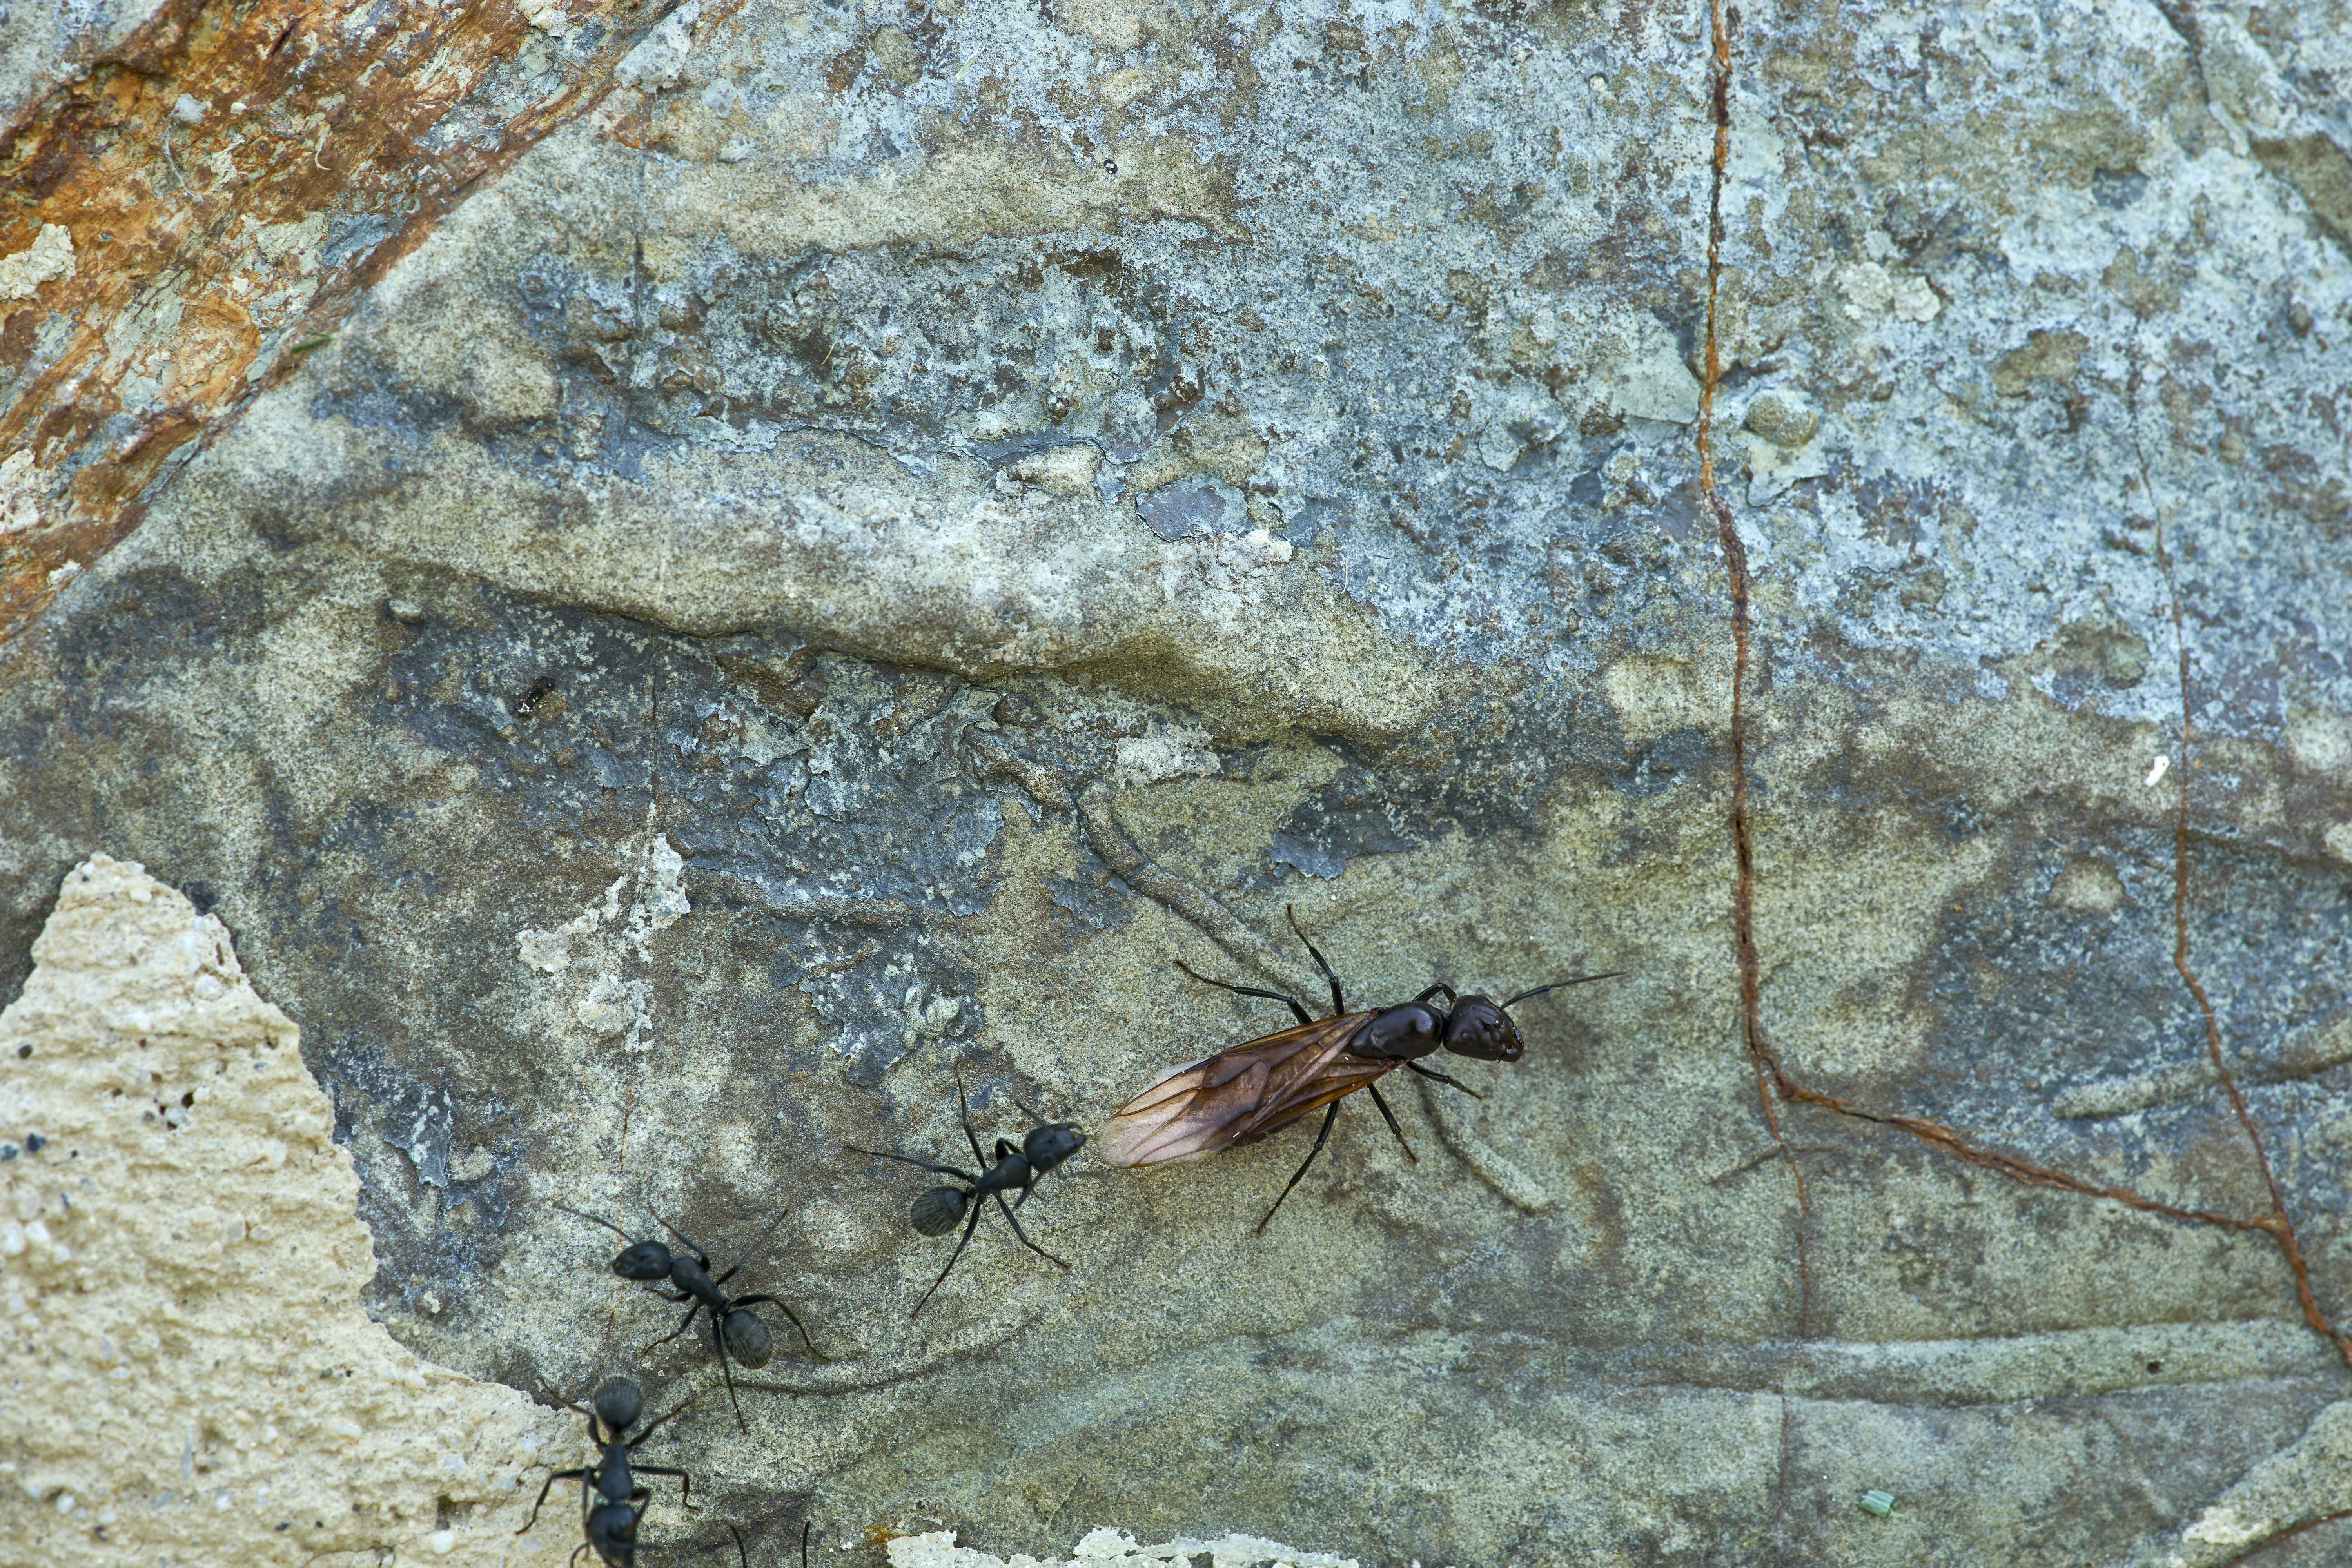 brown ant walking on boulder